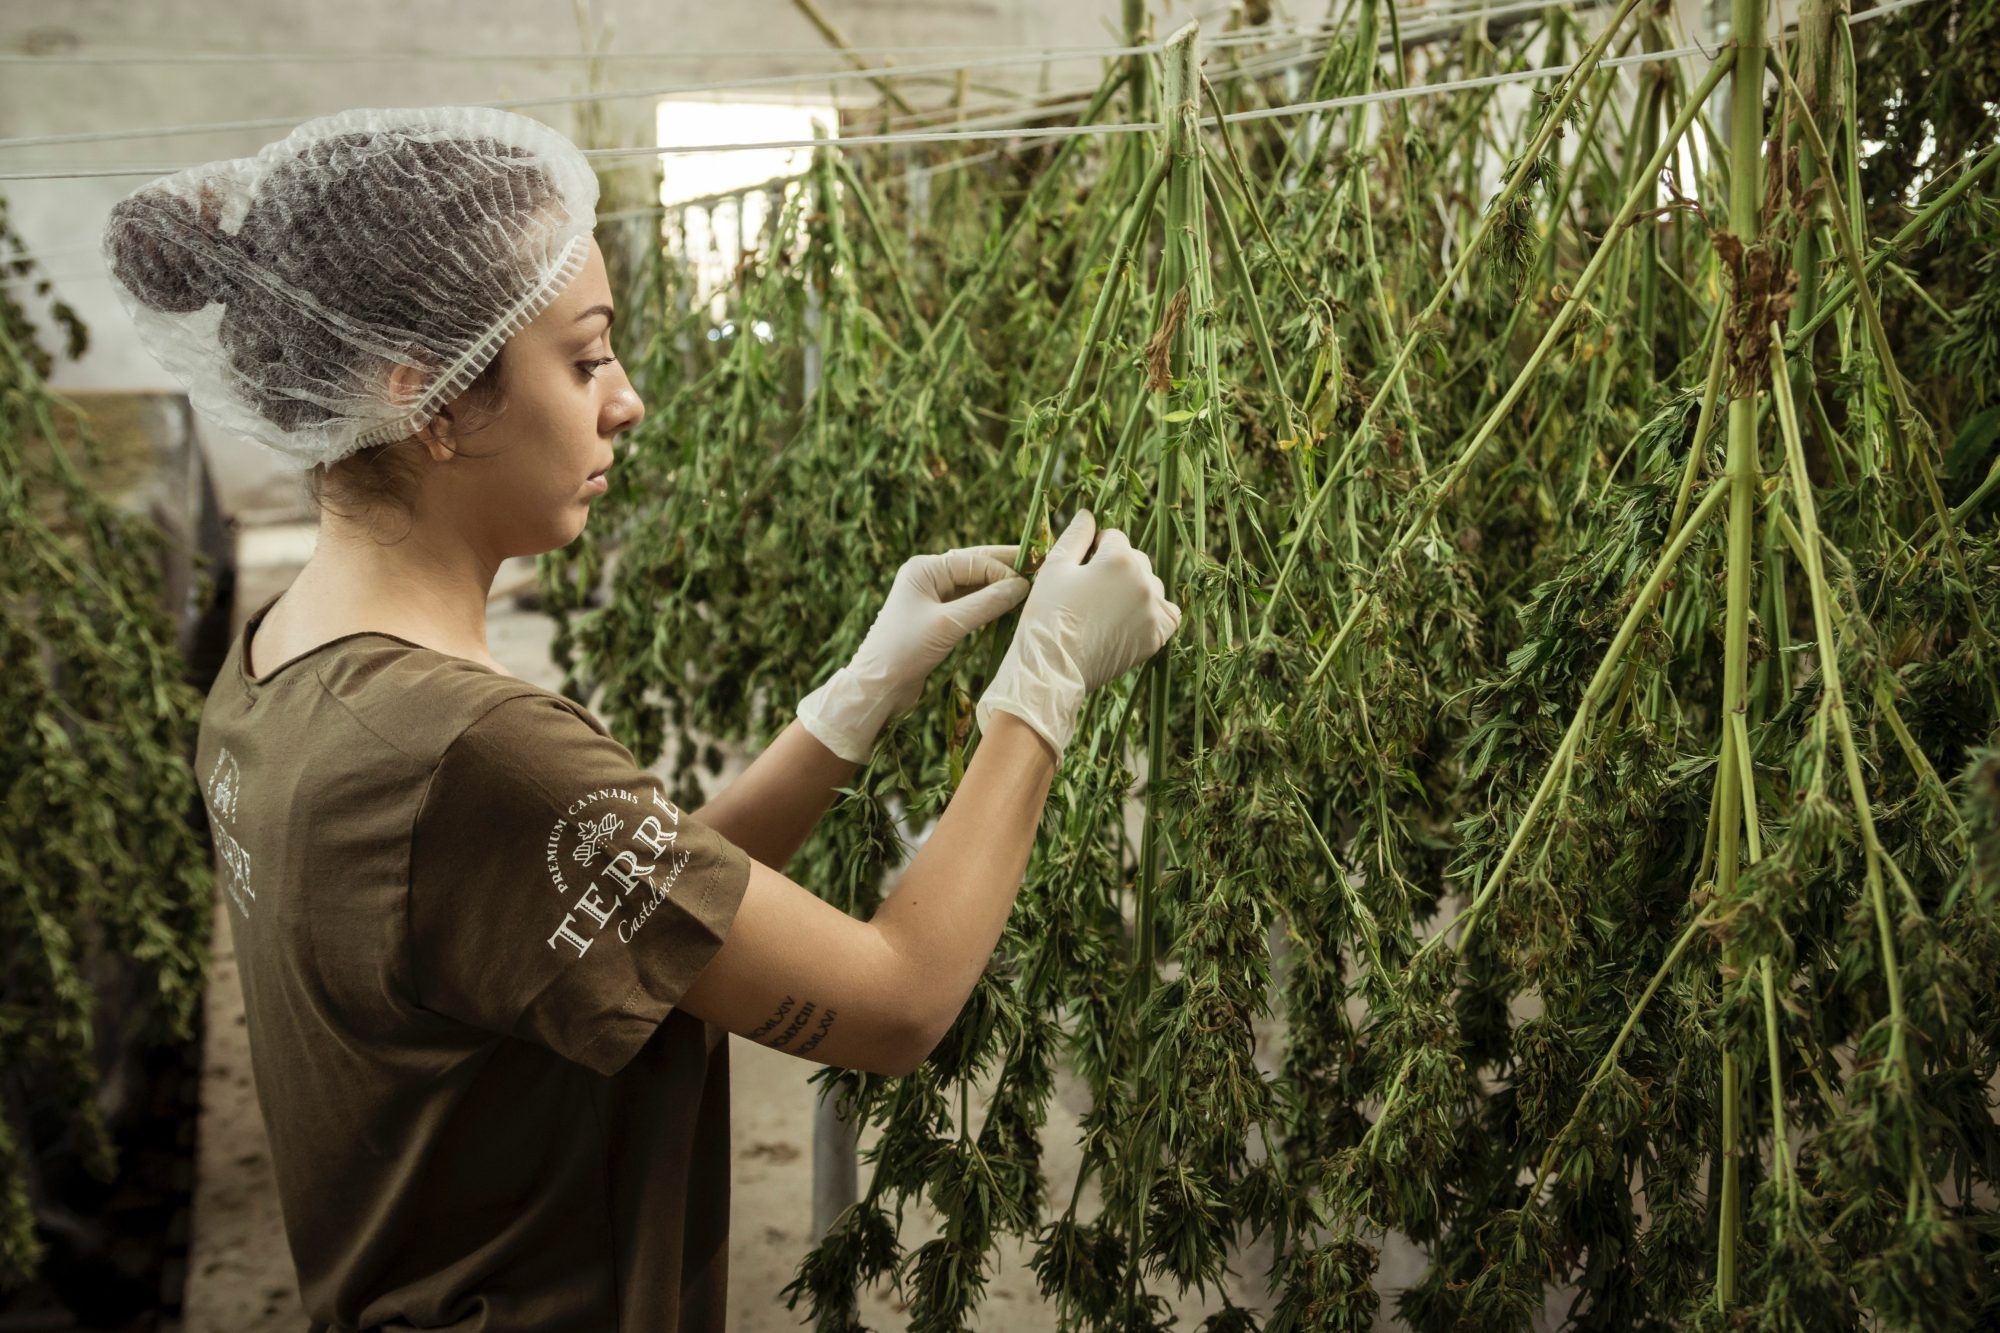 Wholesale Cannabis - Quality Control